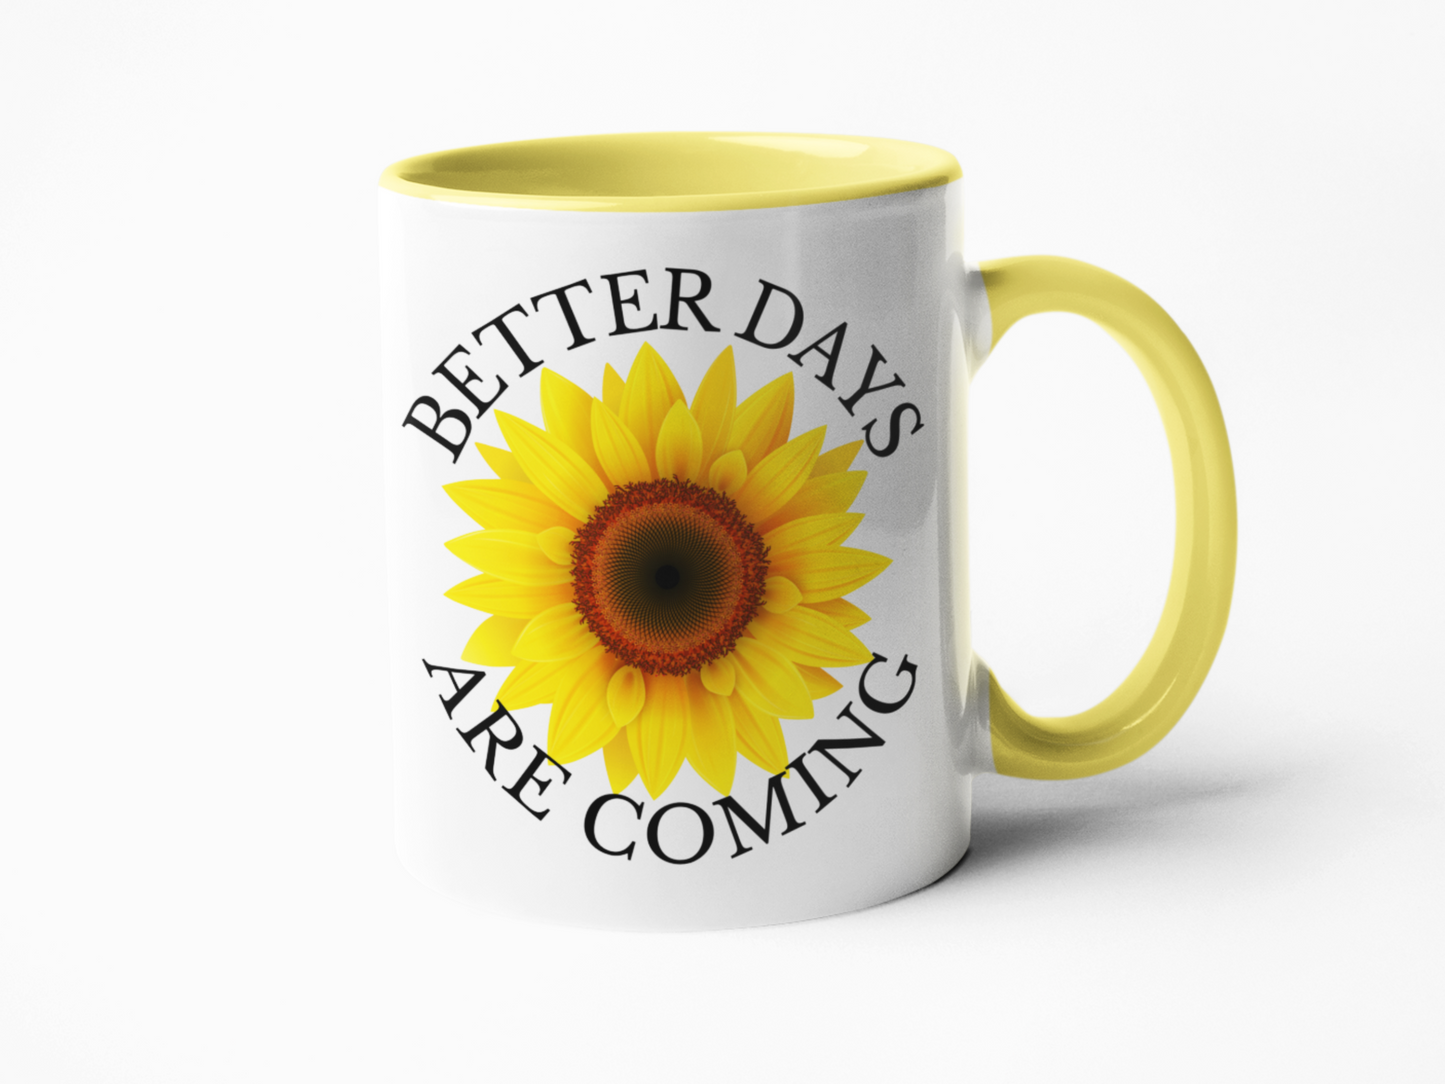 Better days are coming positivity coffee mug